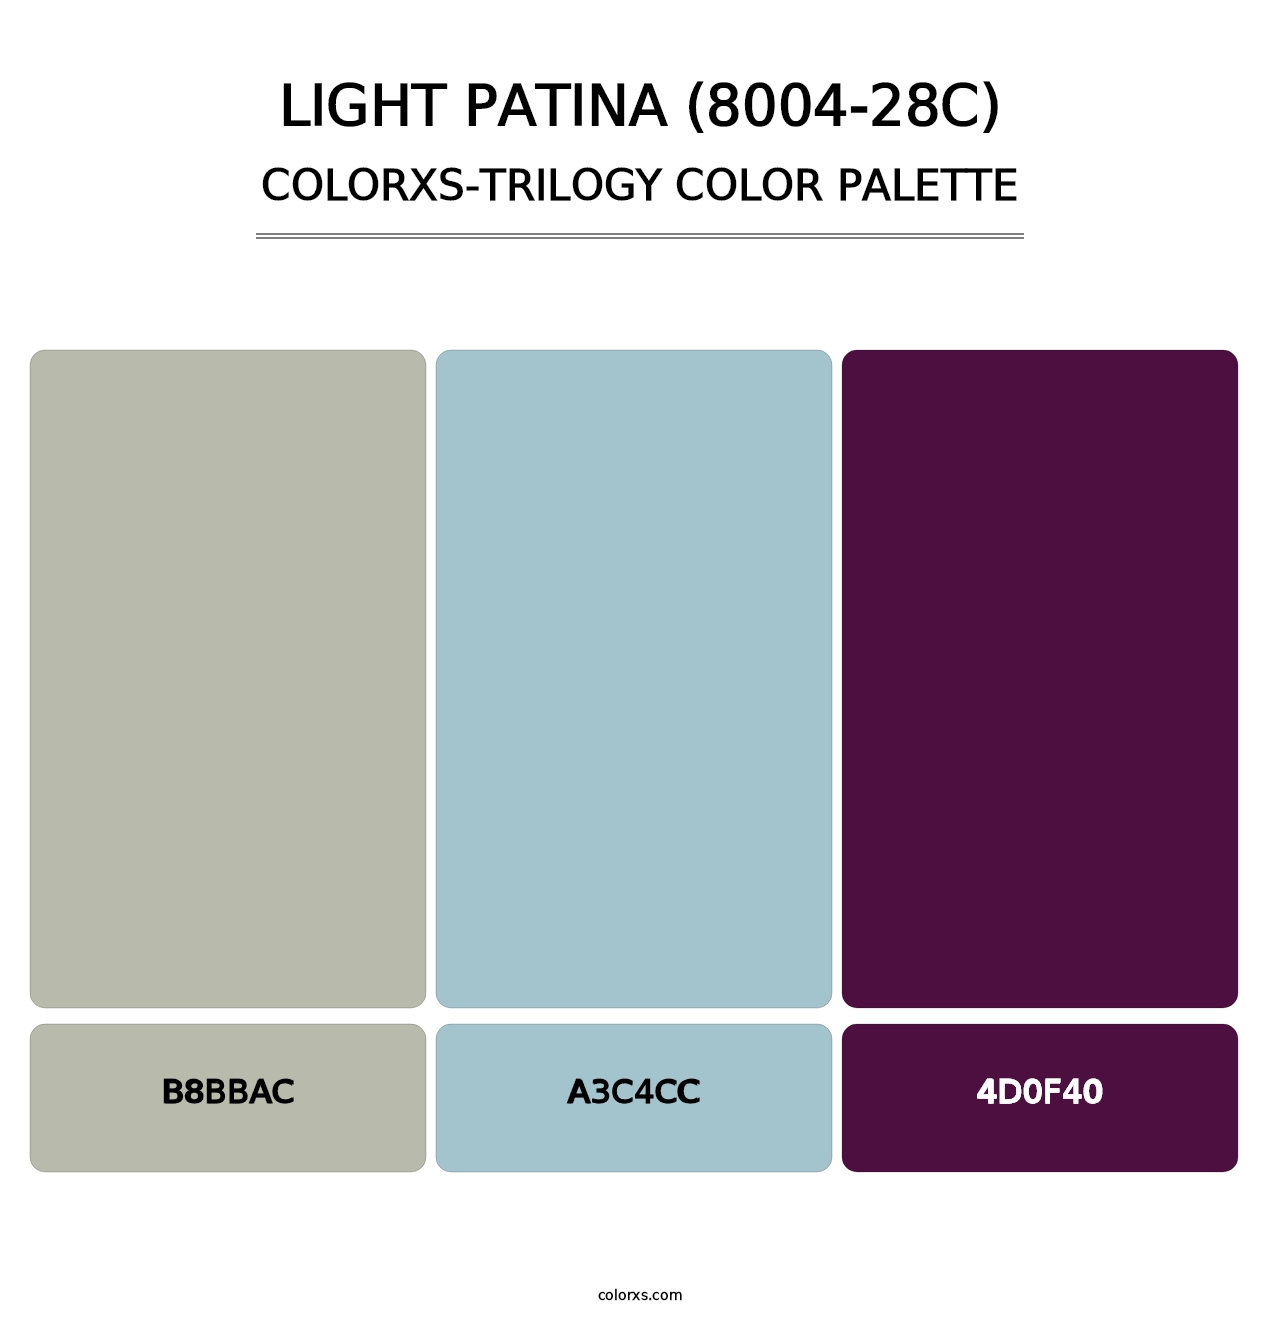 Light Patina (8004-28C) - Colorxs Trilogy Palette